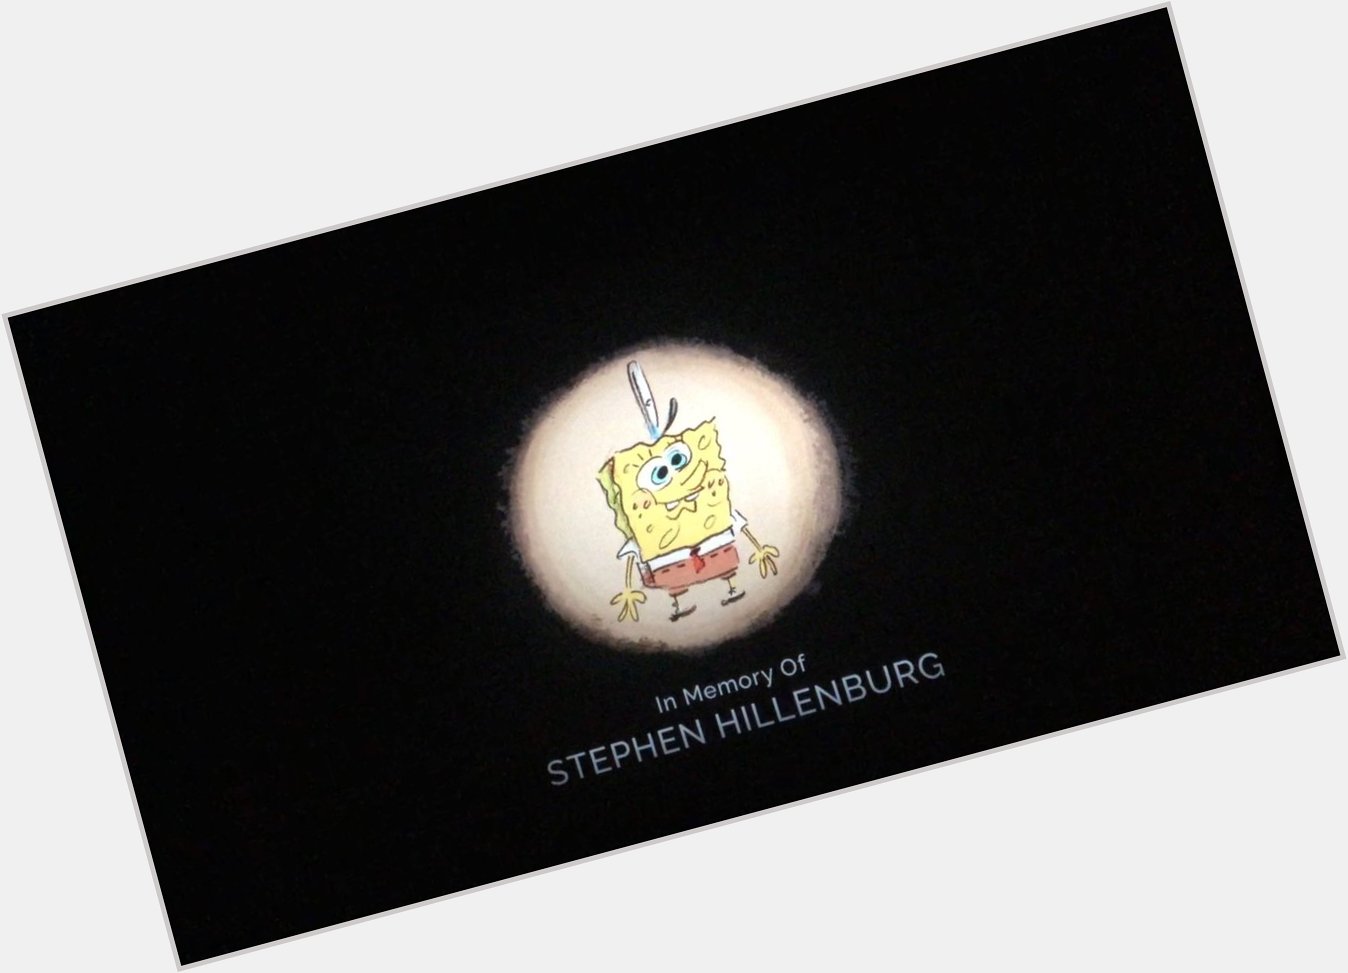 Happy birthday to Stephen Hillenburg (1961-2018), creator of SpongeBob SquarePants. RIP. 